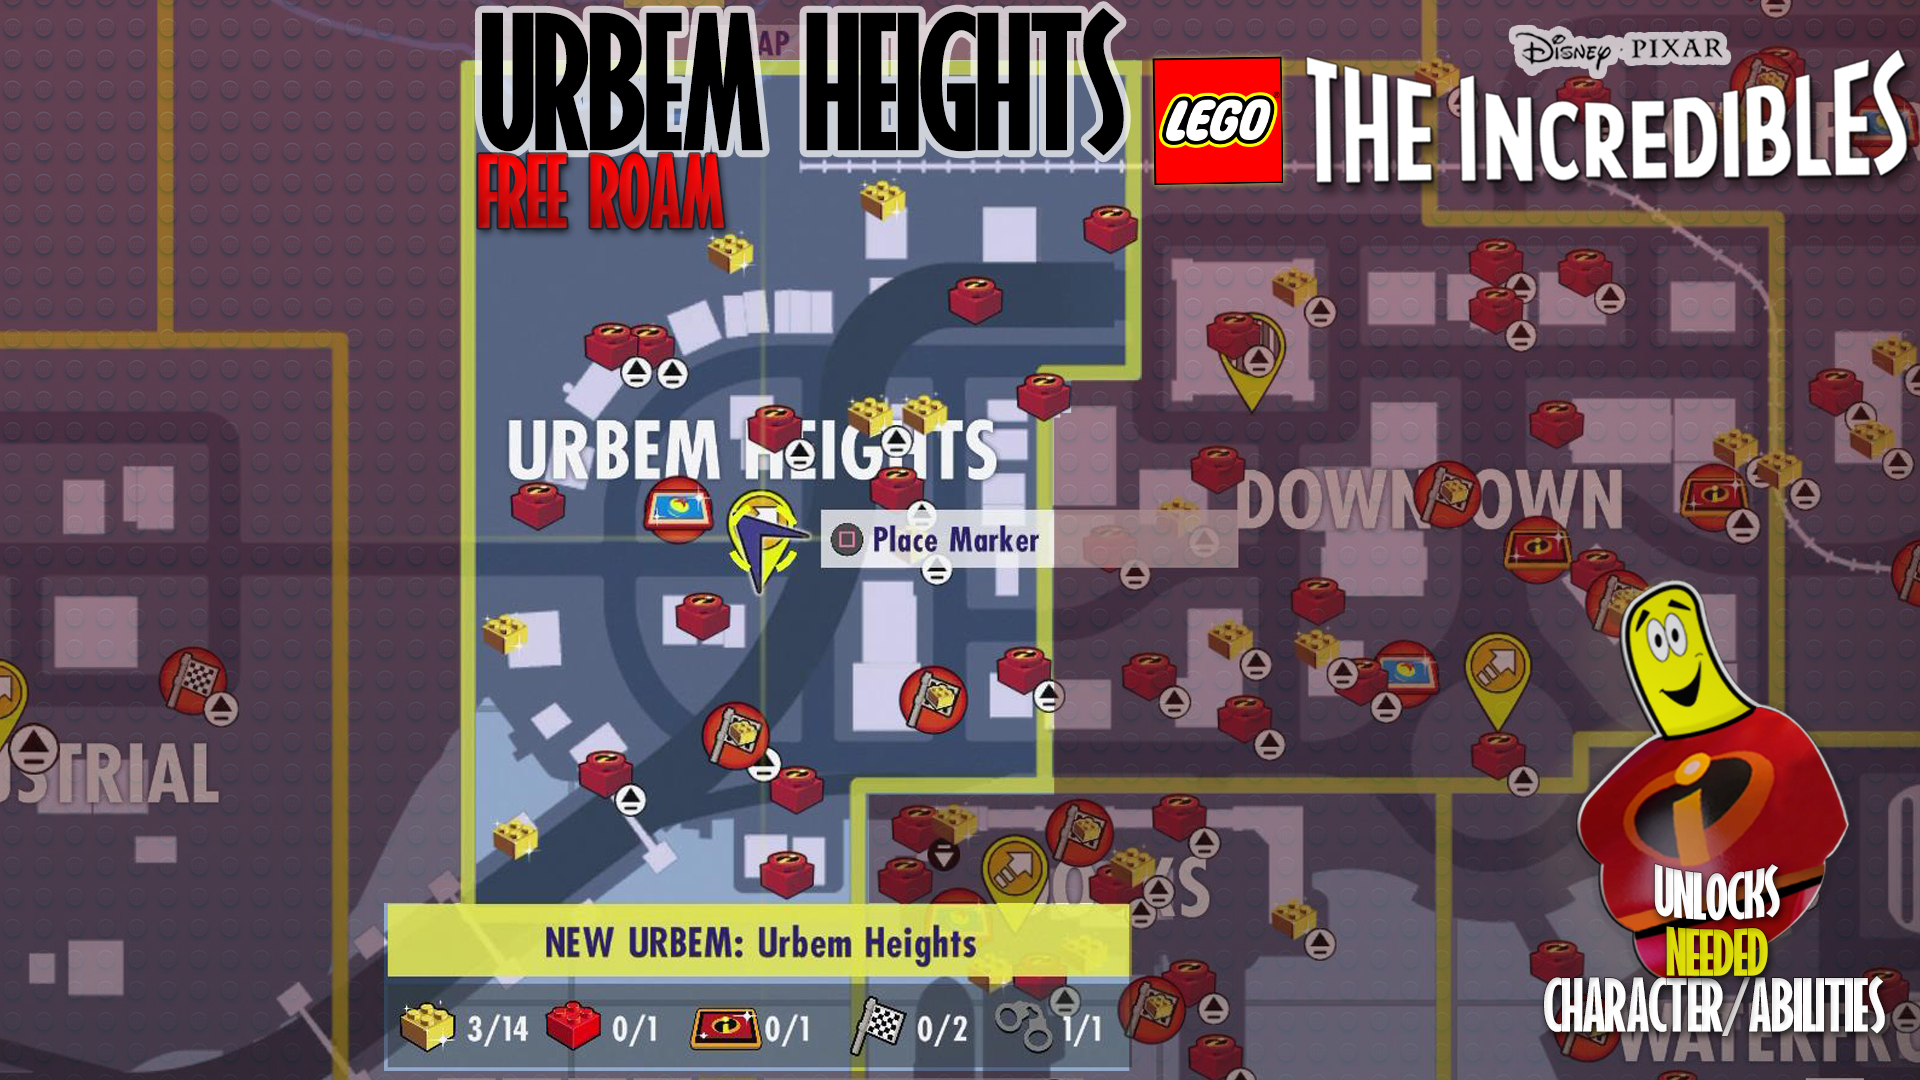 Lego The Incredibles: Urbem Heights FREE ROAM – HTG